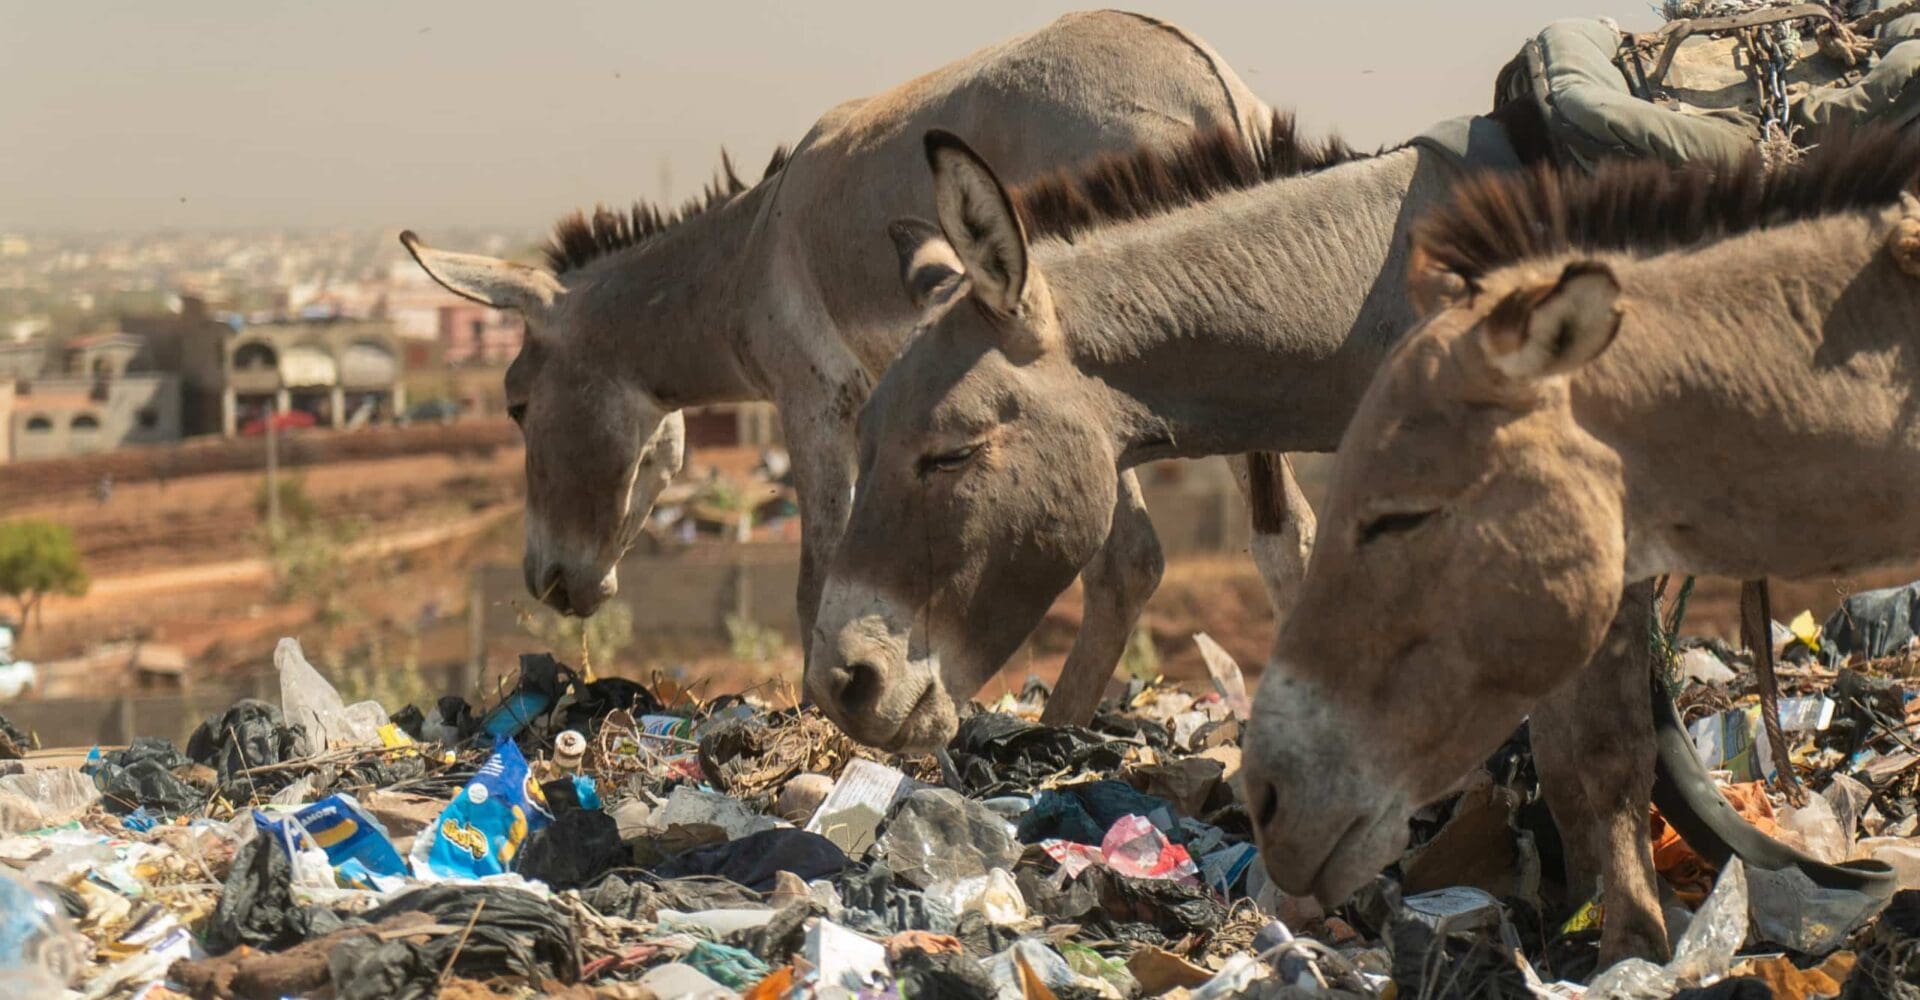 Three donkeys rummaging through plastic at a rubbish dump.